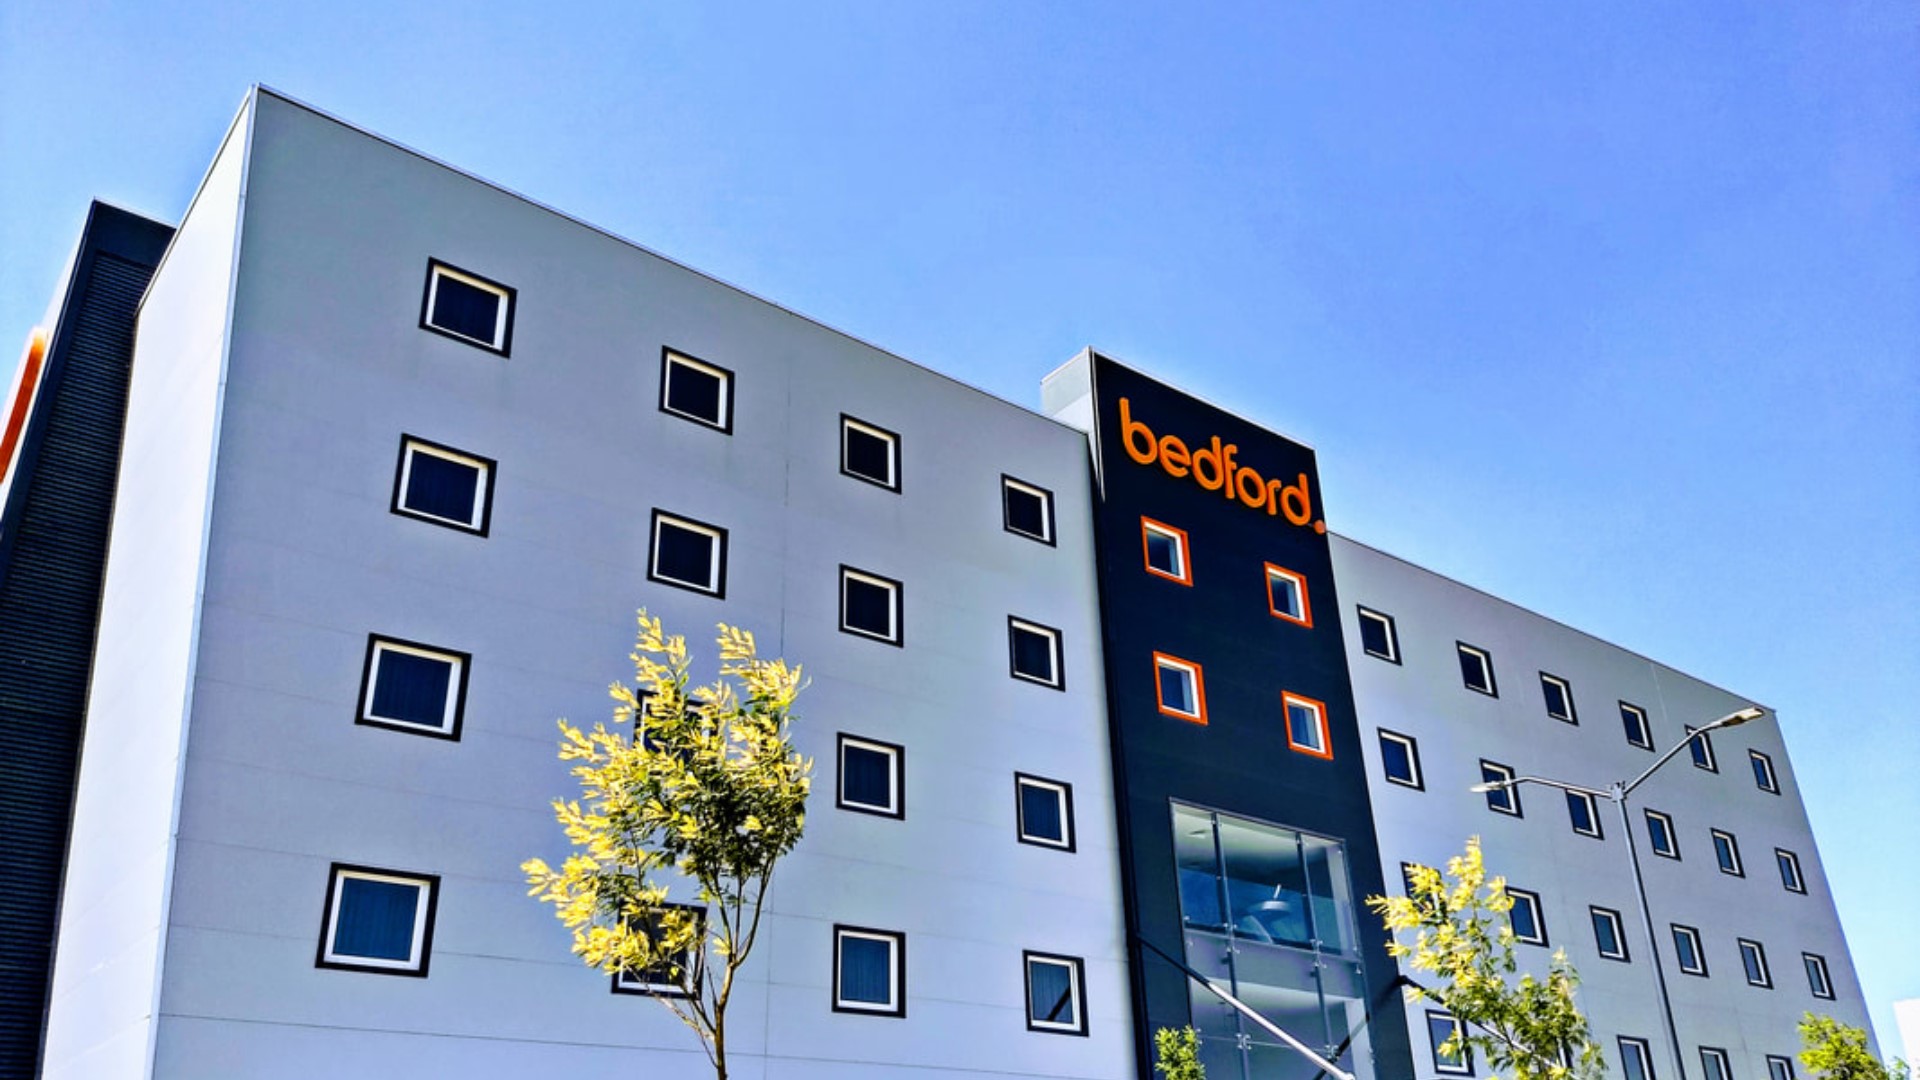 Bedford Hotel 1